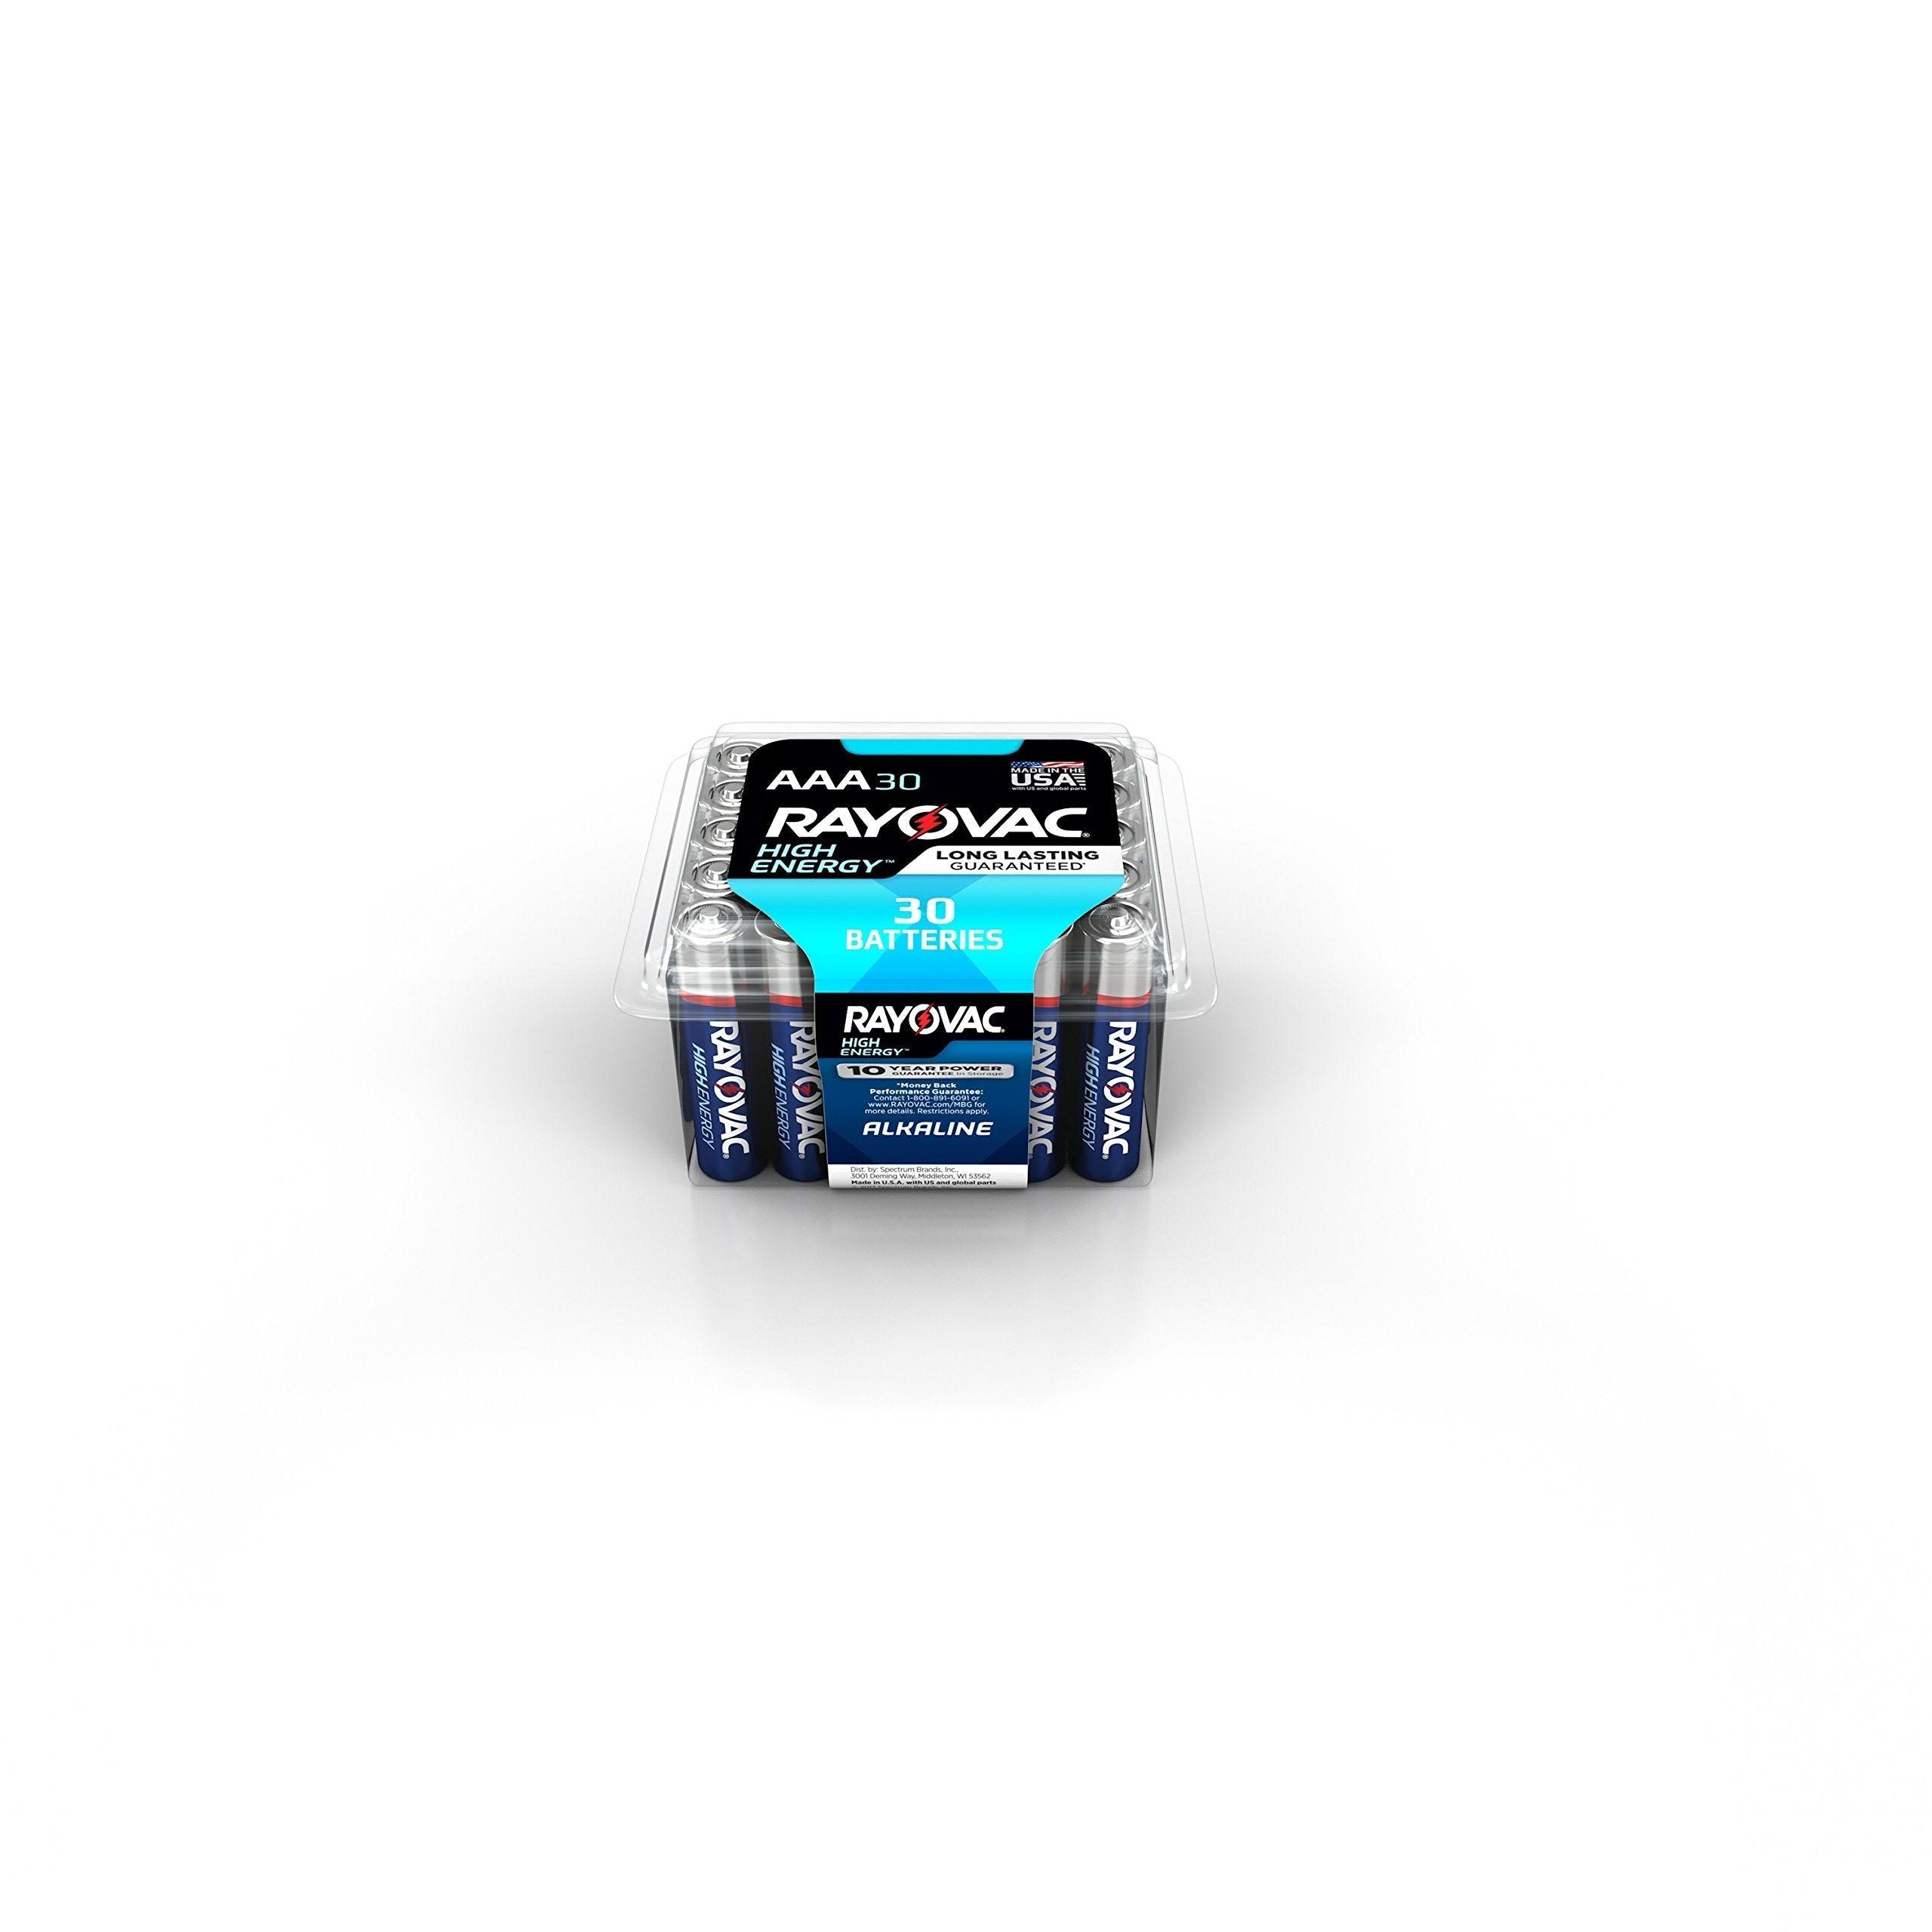 Rayovac Alkaline AAA Batteries - 30 Pack